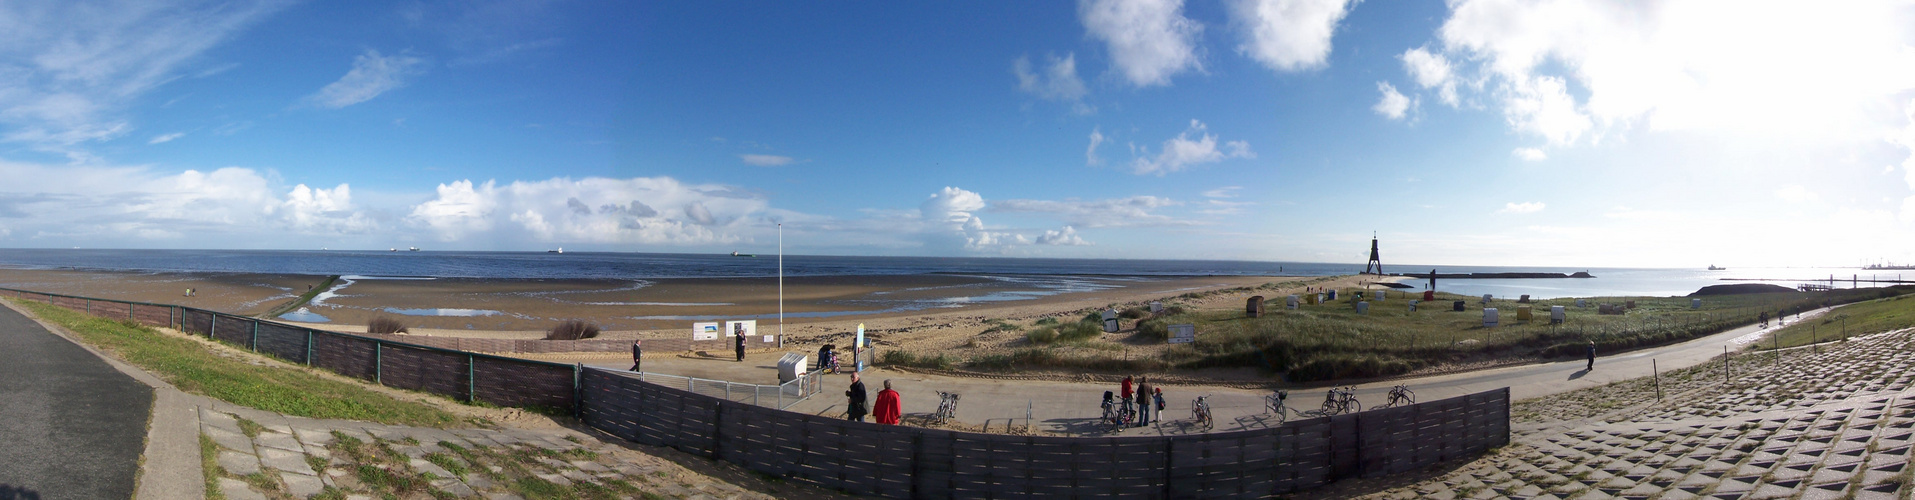 Panorama Kugelbake Cuxhaven